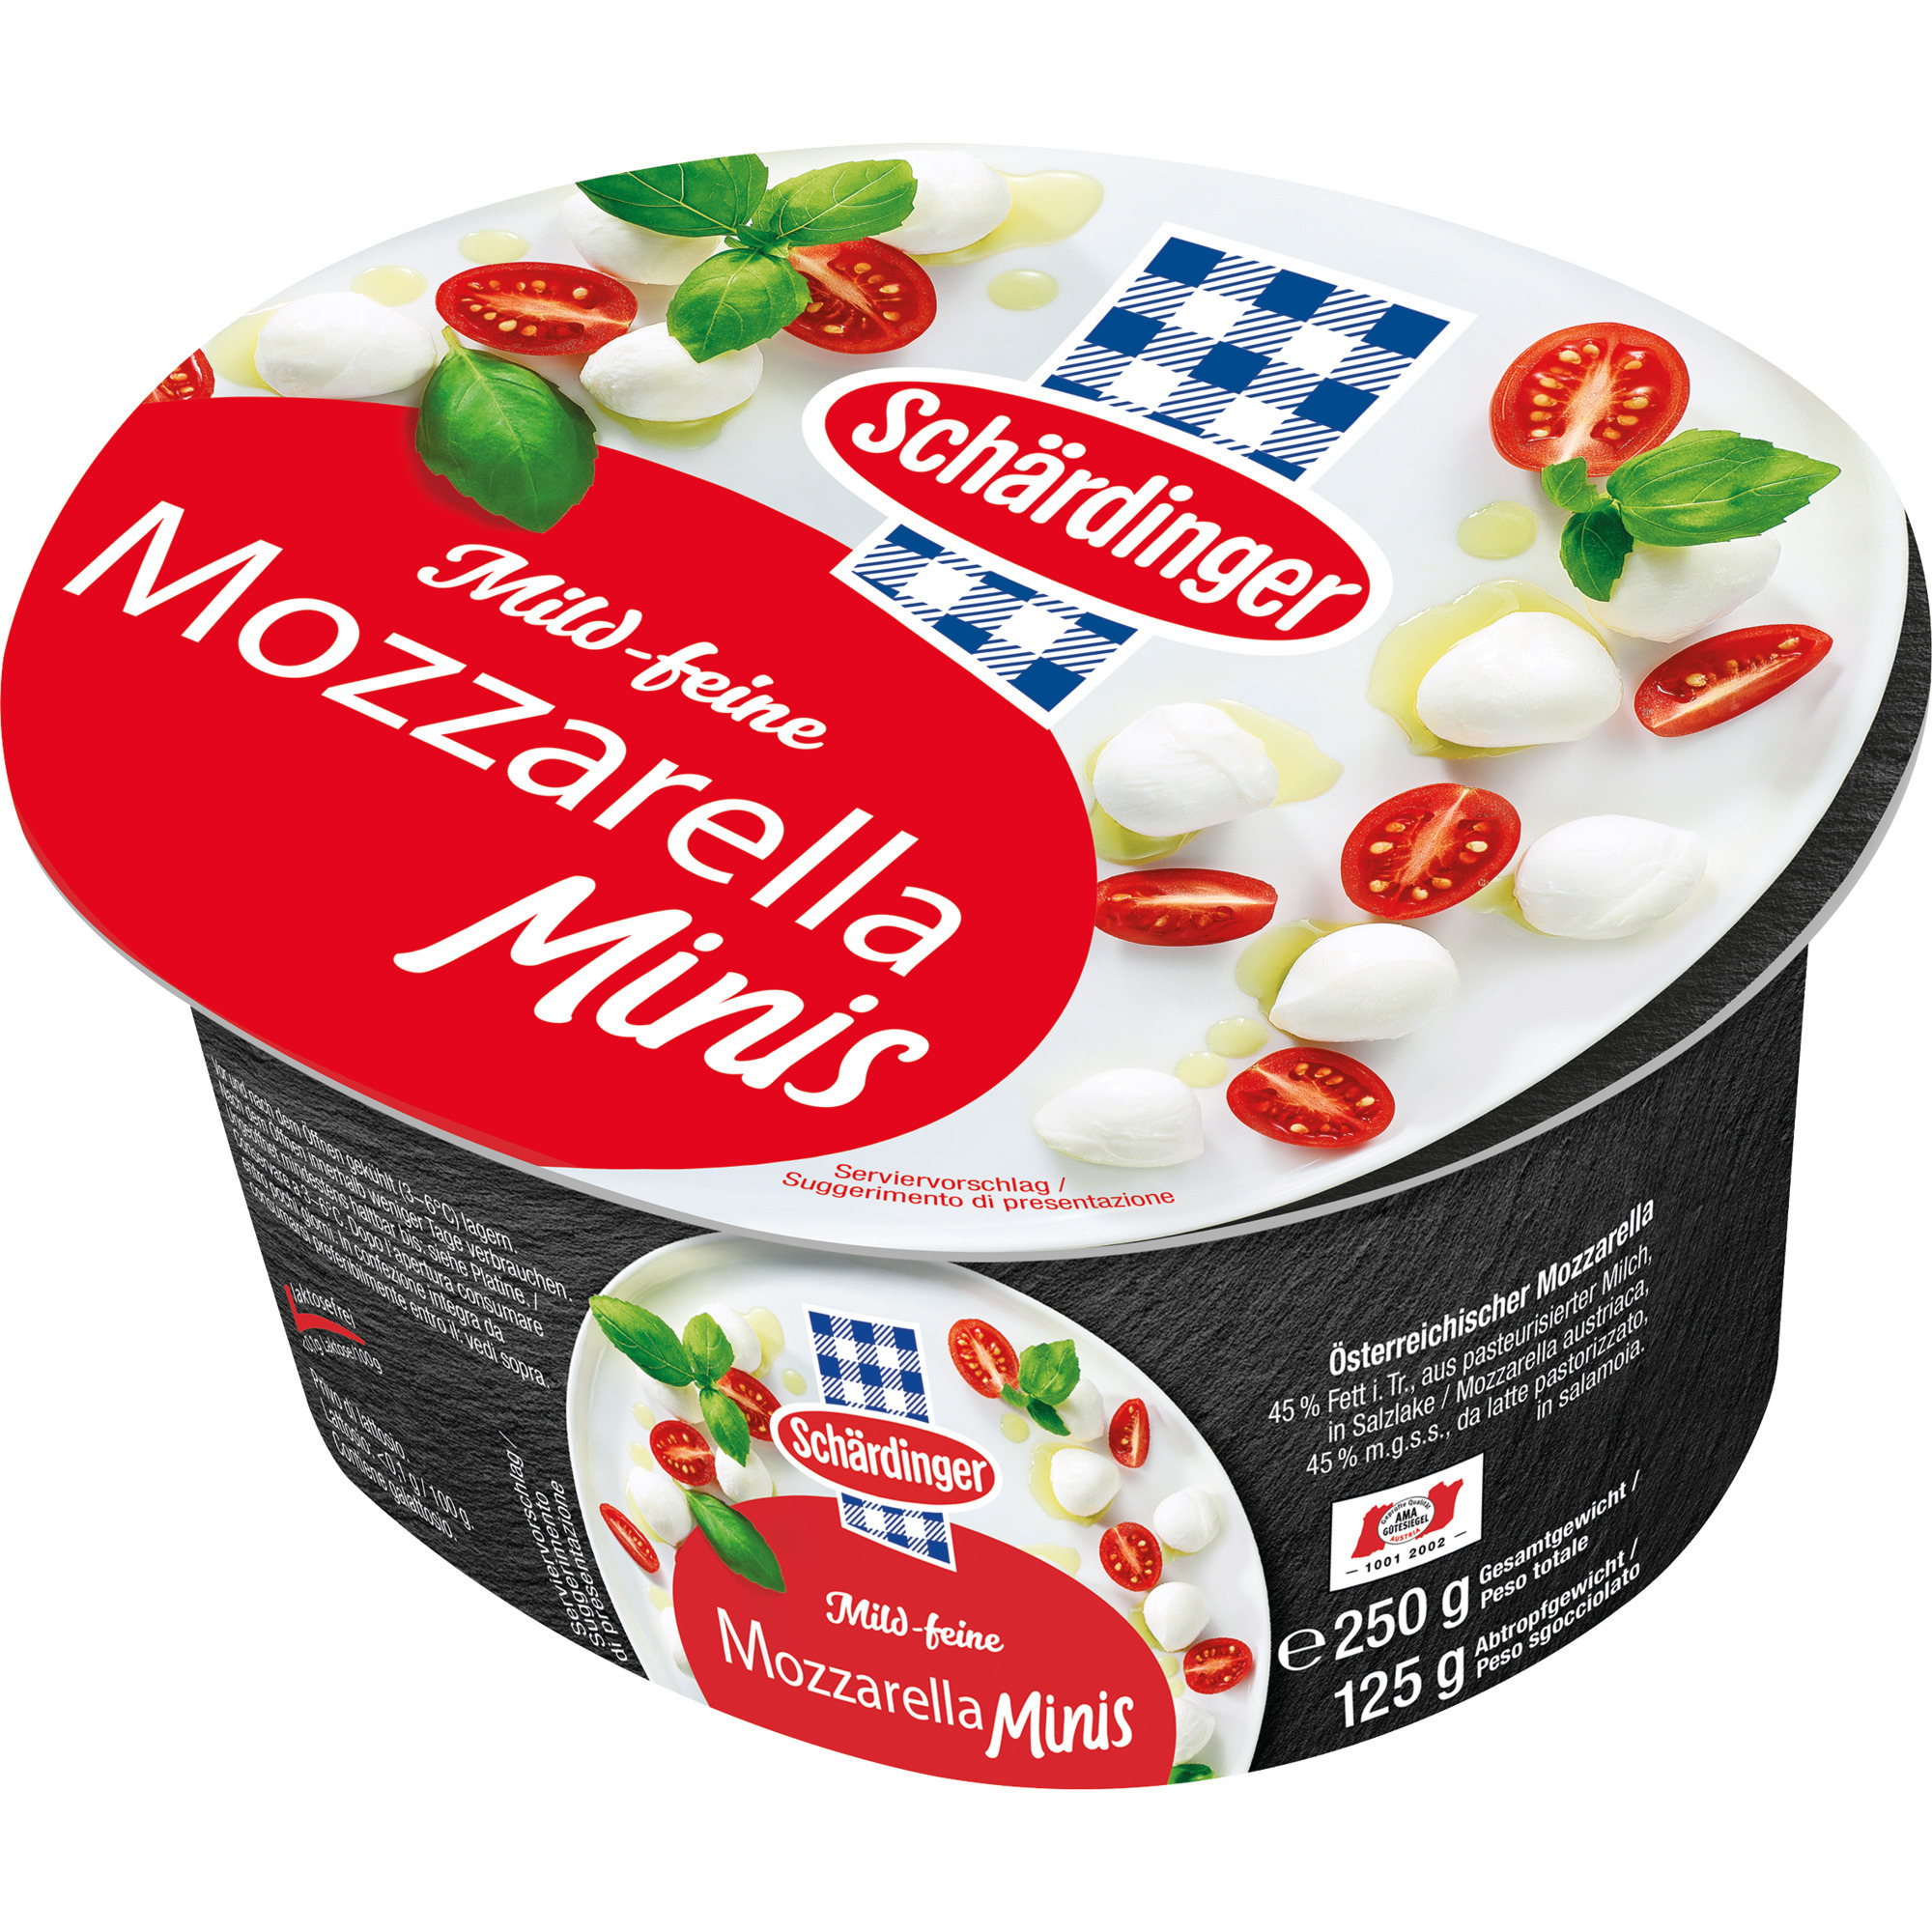 Schärd. Mozzarella Minis 45% 125g